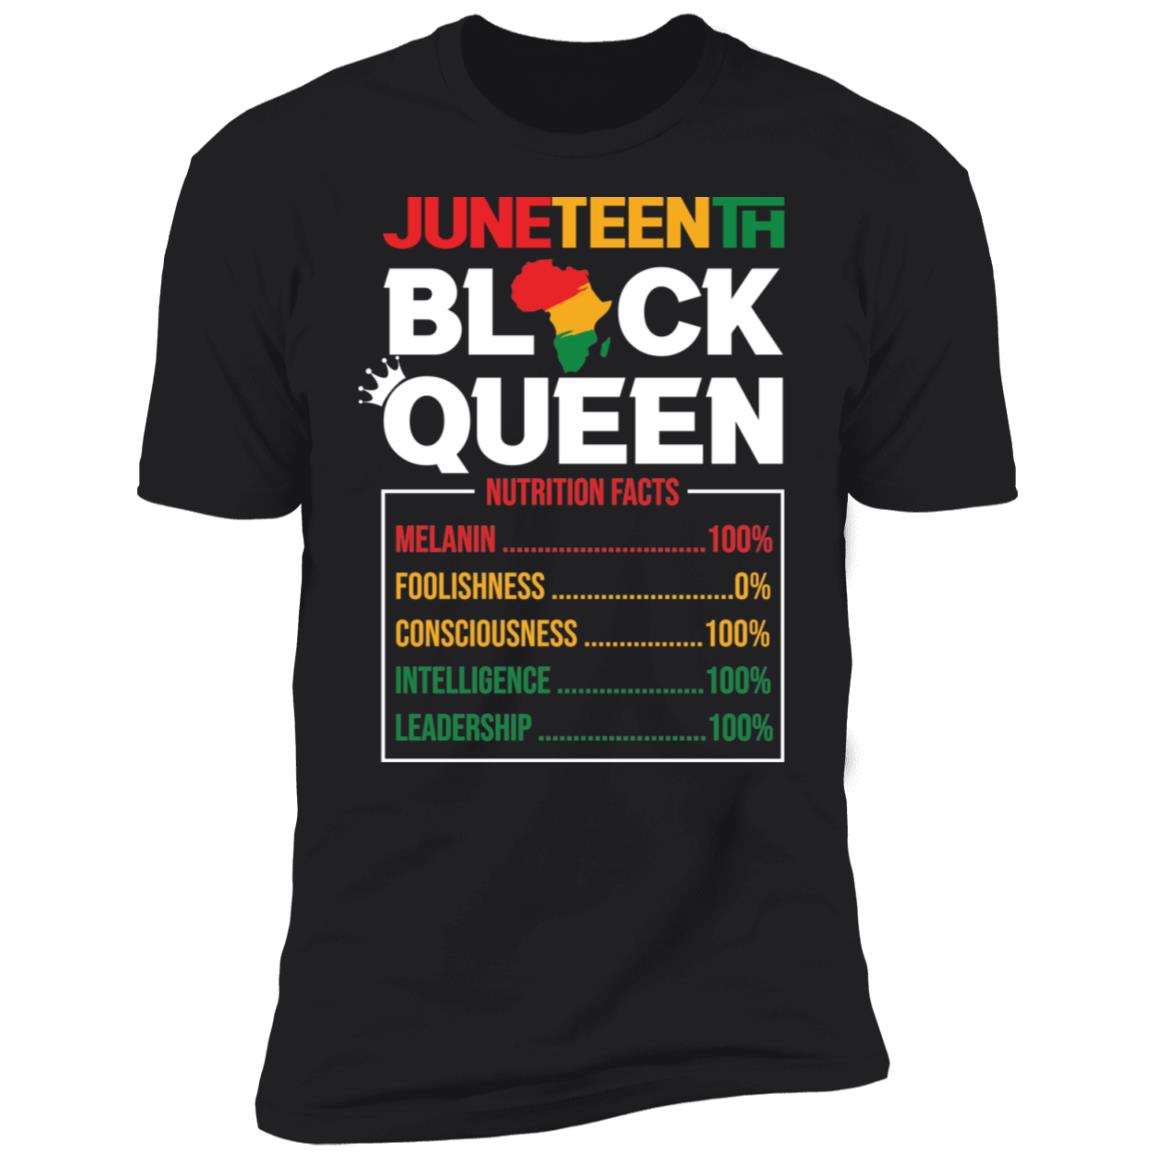 Juneteenth Black Queen Nutrition Facts T-shirt Apparel Gearment Premium T-Shirt Black S